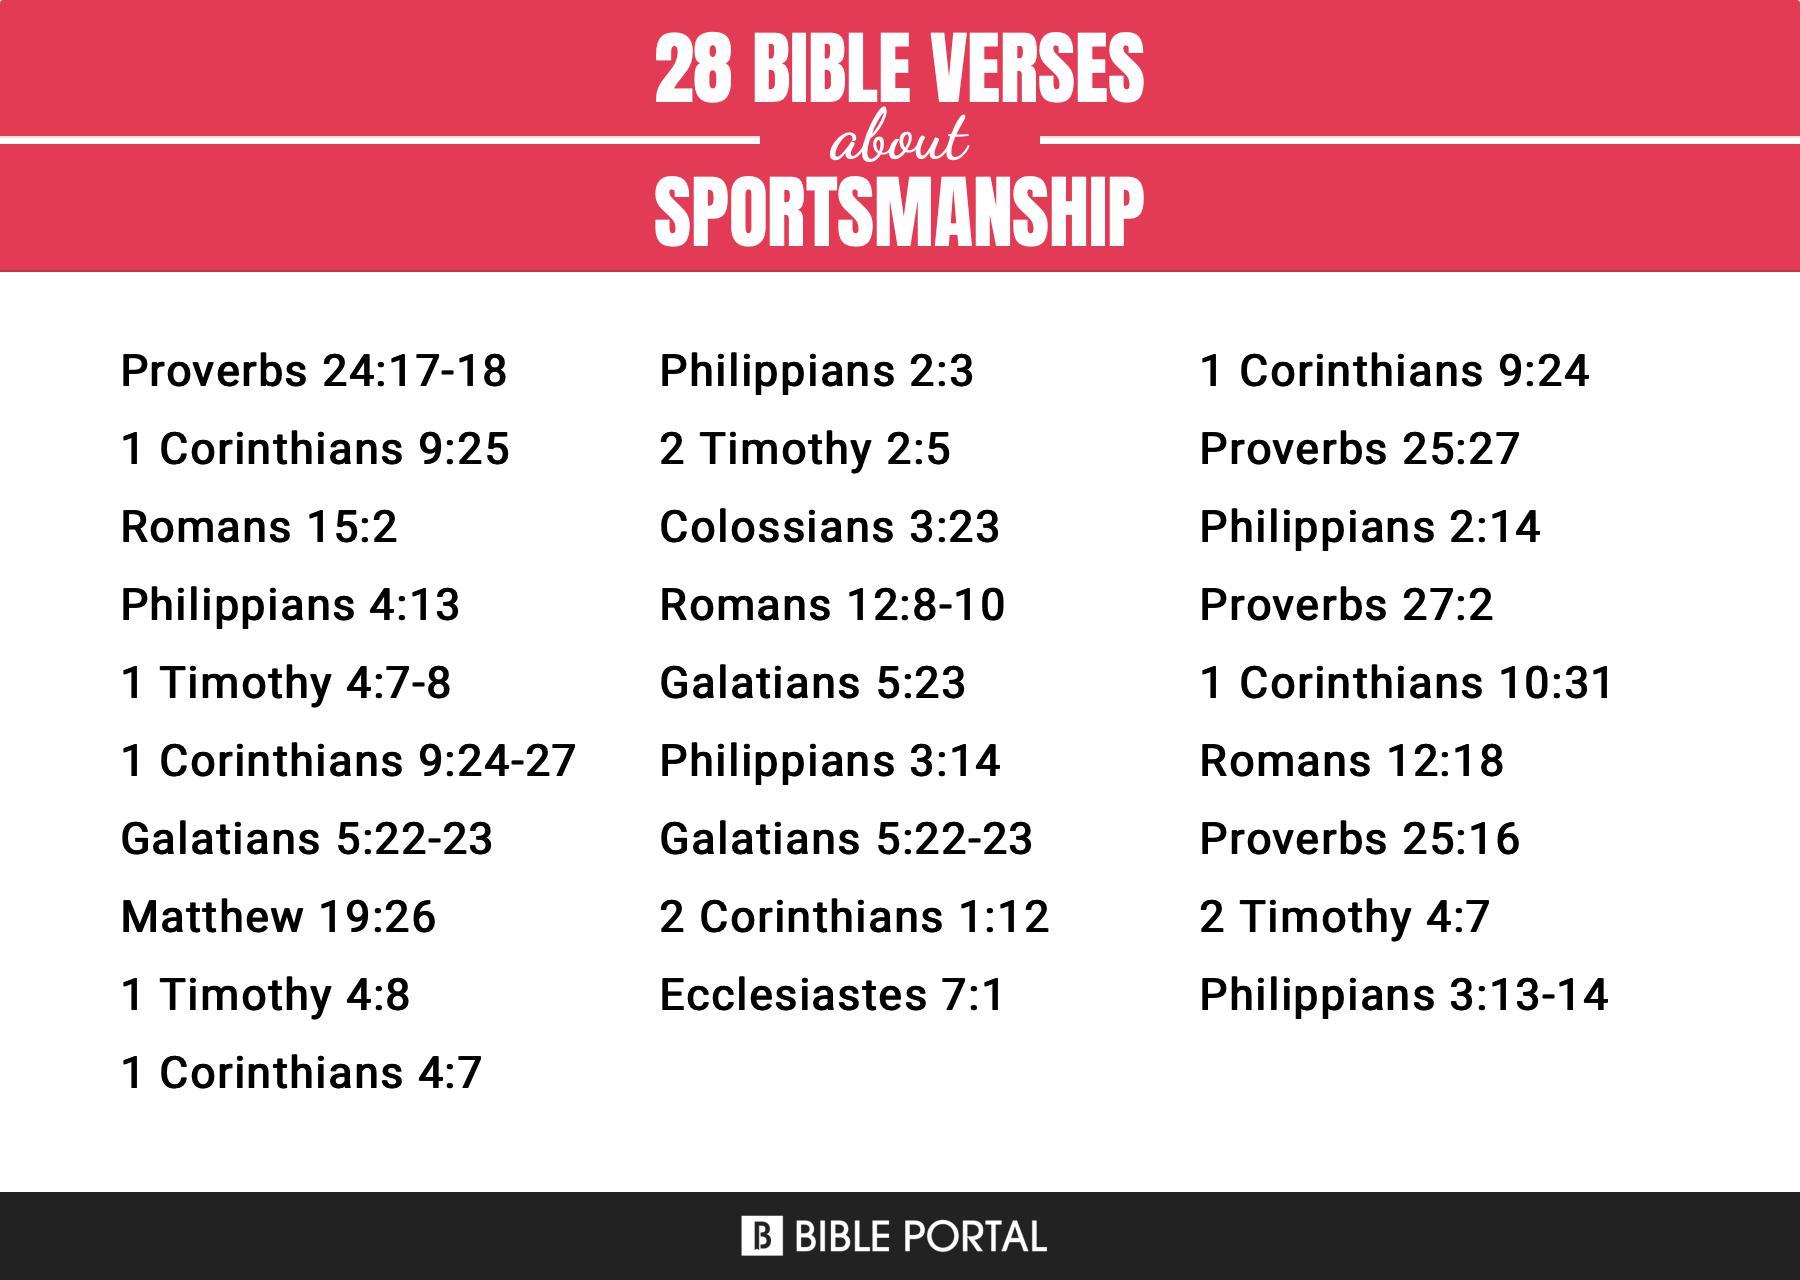 28 Bible Verses about Sportsmanship